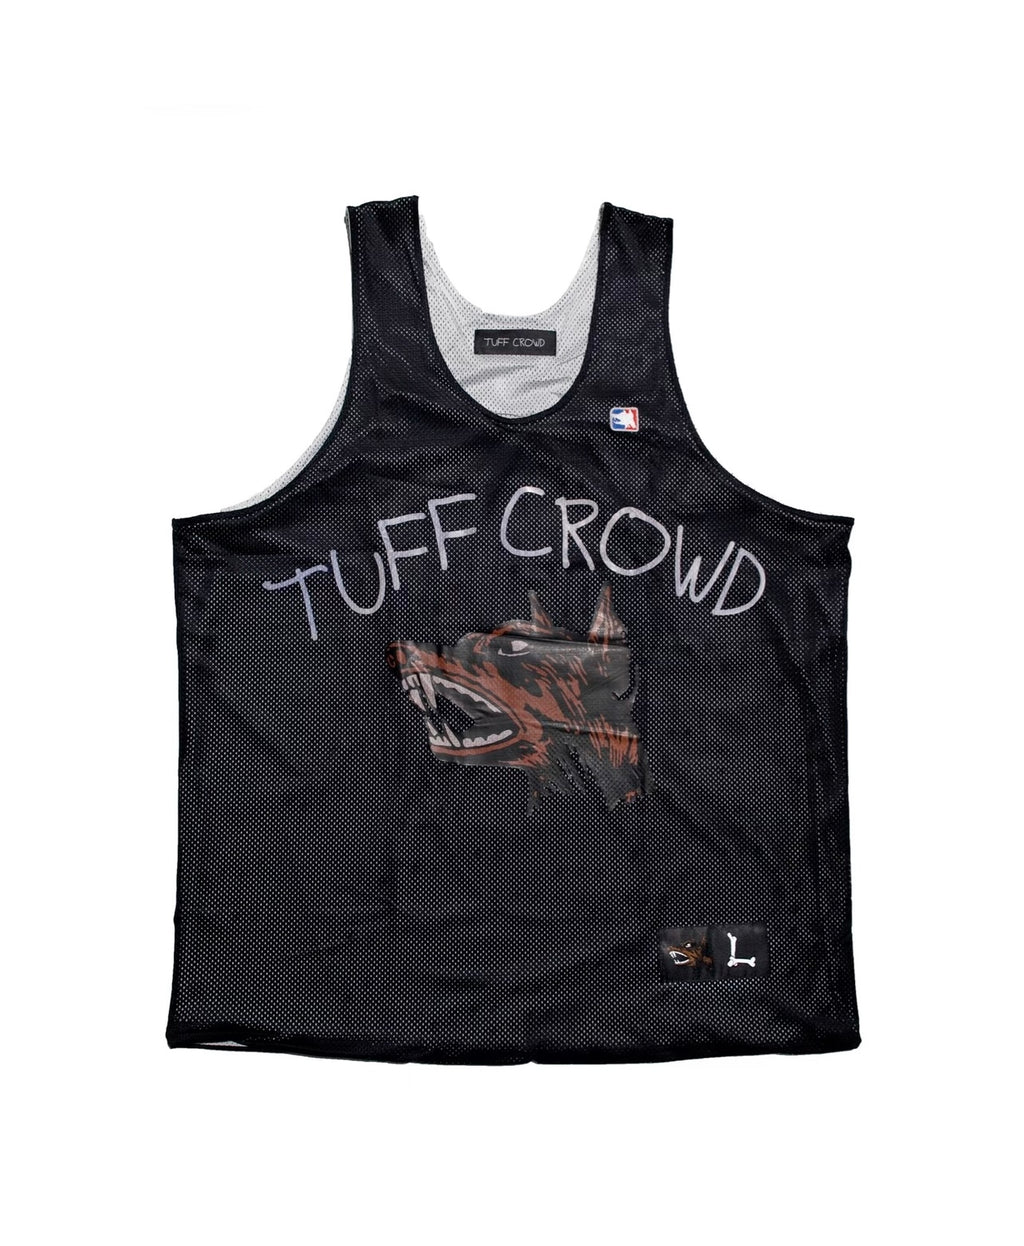 TuffCrowd.Com – Tuff Crowd